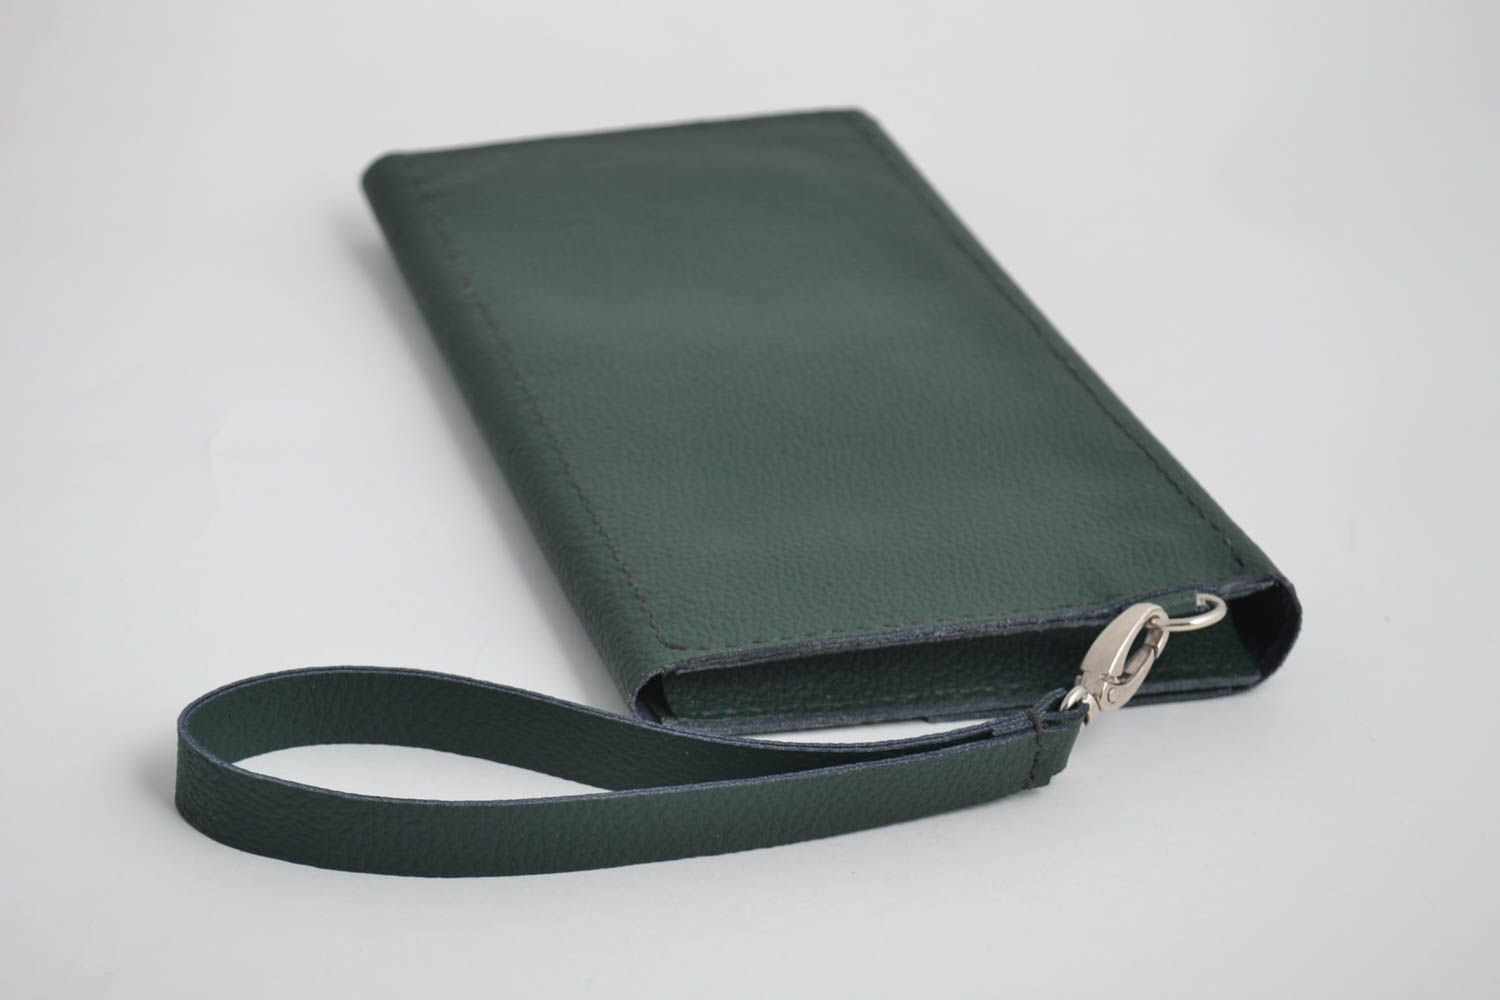 Unusual handmade leather clutch bag leather handbag leather goods gift ideas photo 5